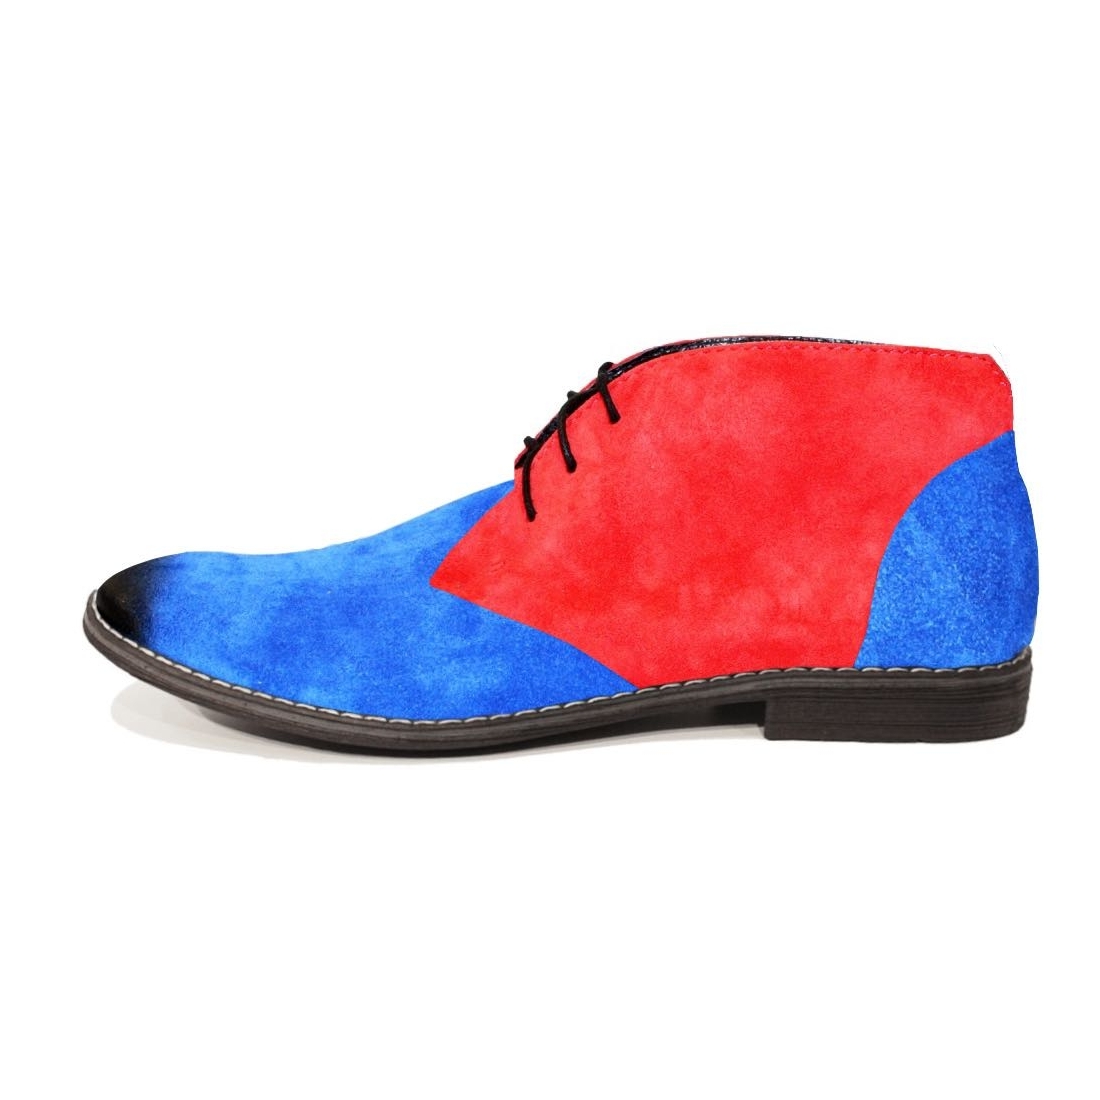 Modello Sterrer - Chukka Botas - Handmade Colorful Italian Leather Shoes